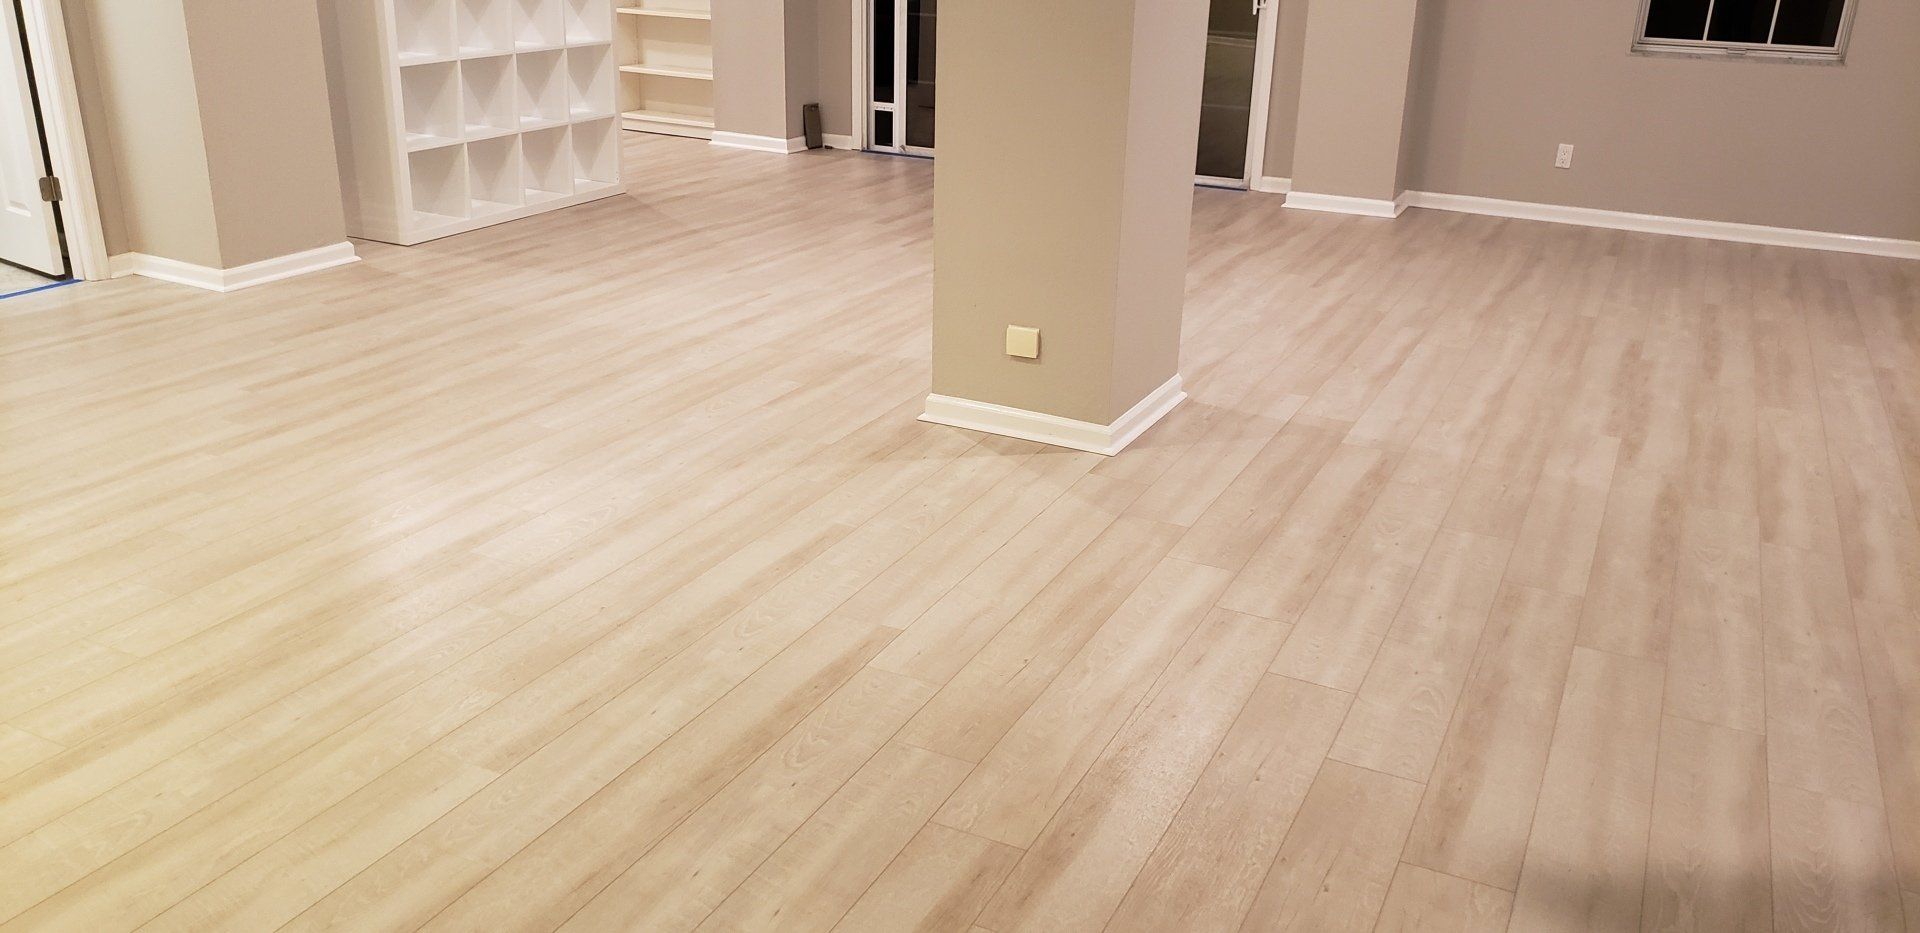 LVP Floors Tampa, FL Perfect Choice Flooring